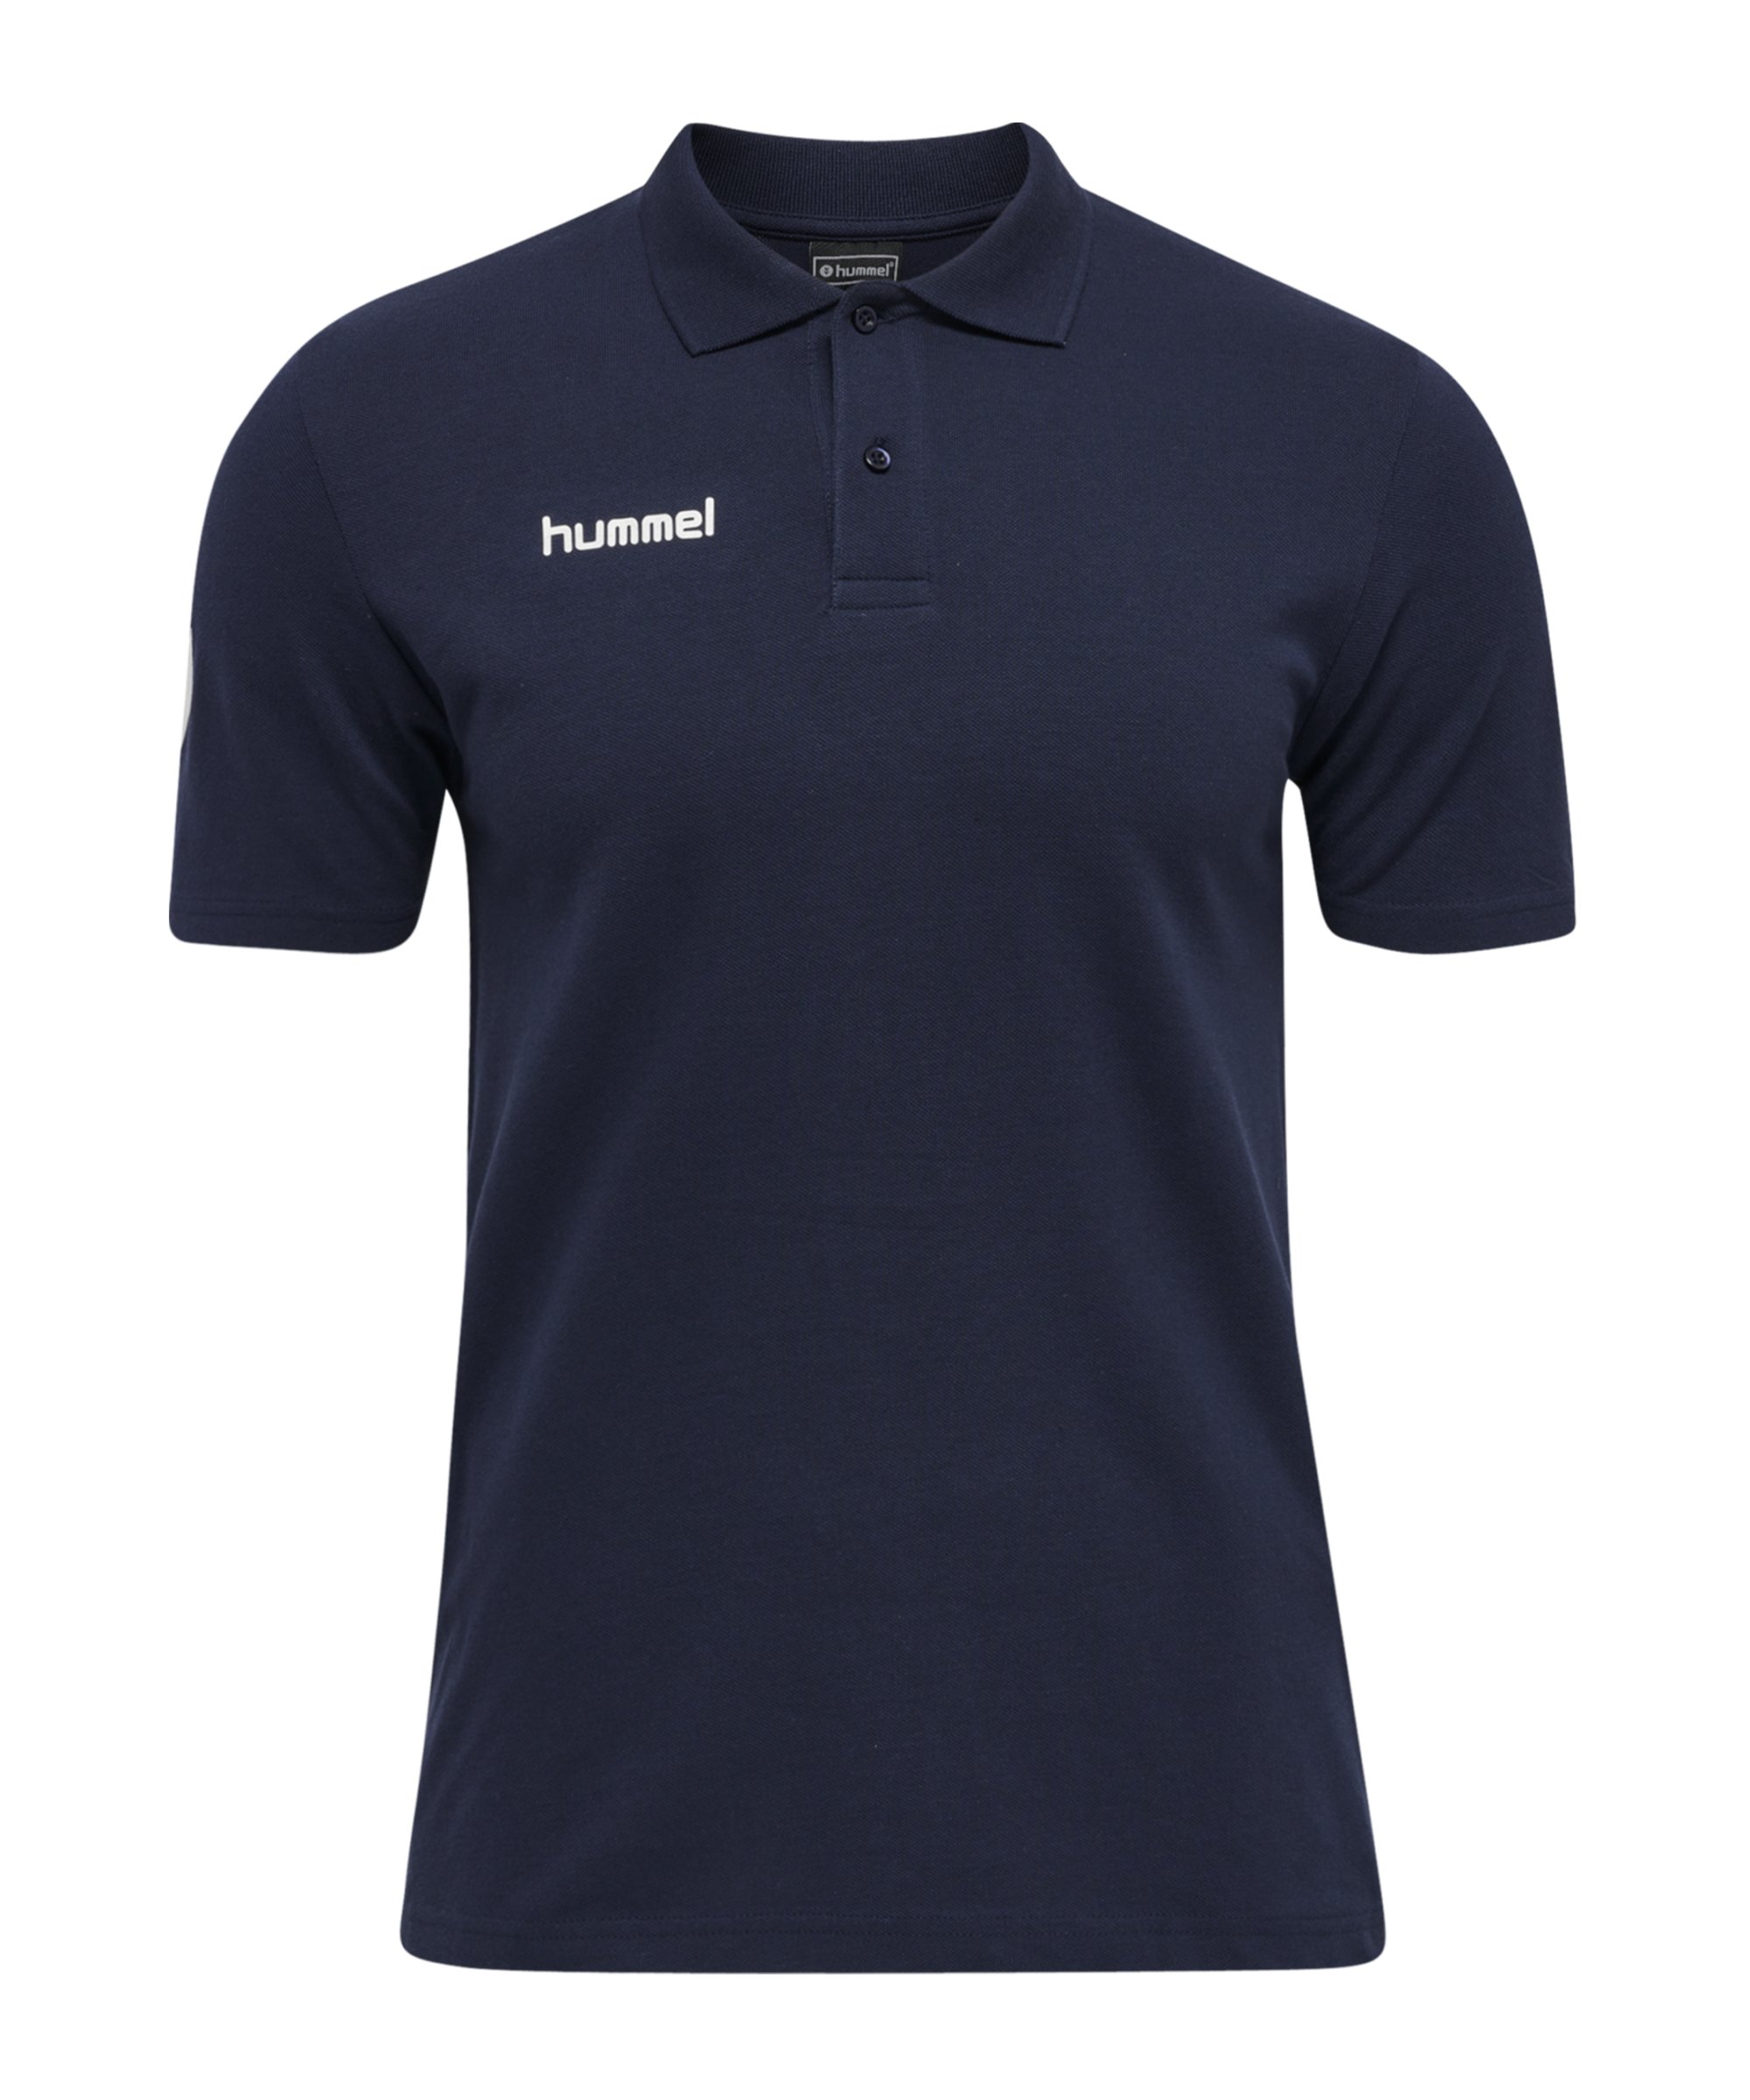 Hummel Cotton Poloshirt Blau F7026 - blau